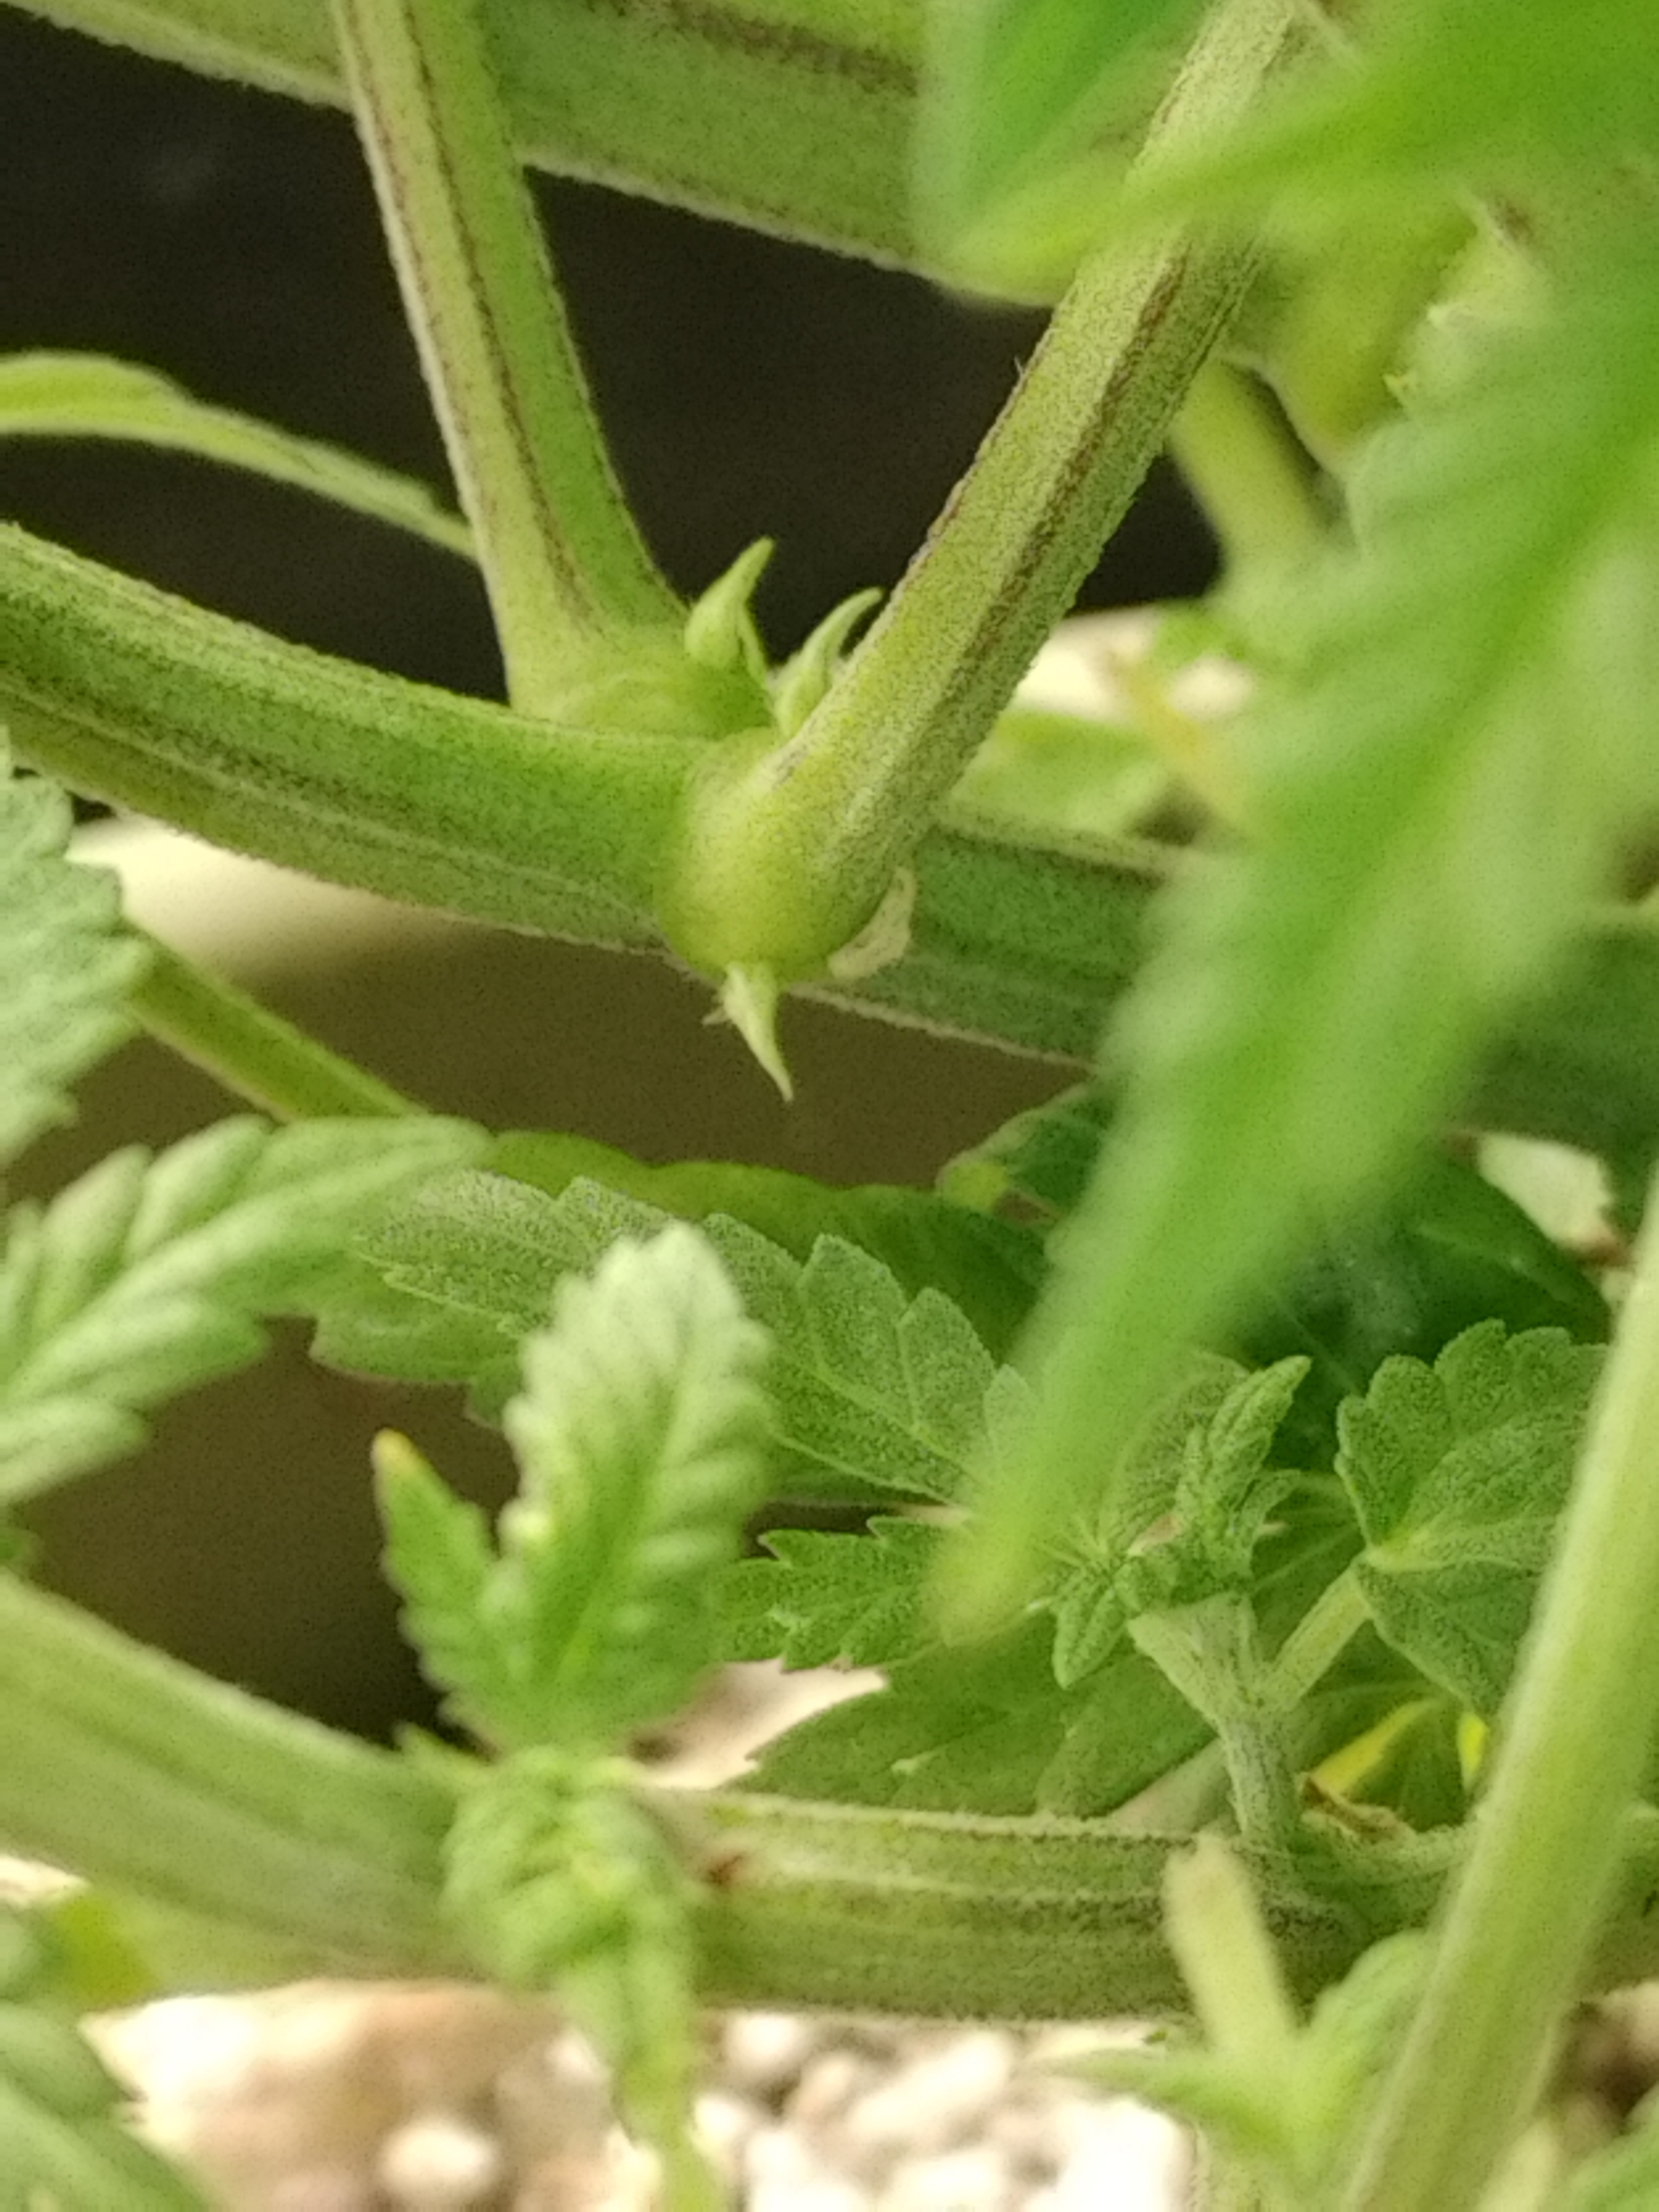 Superskunk in veg - Flowering Marijuana Strain